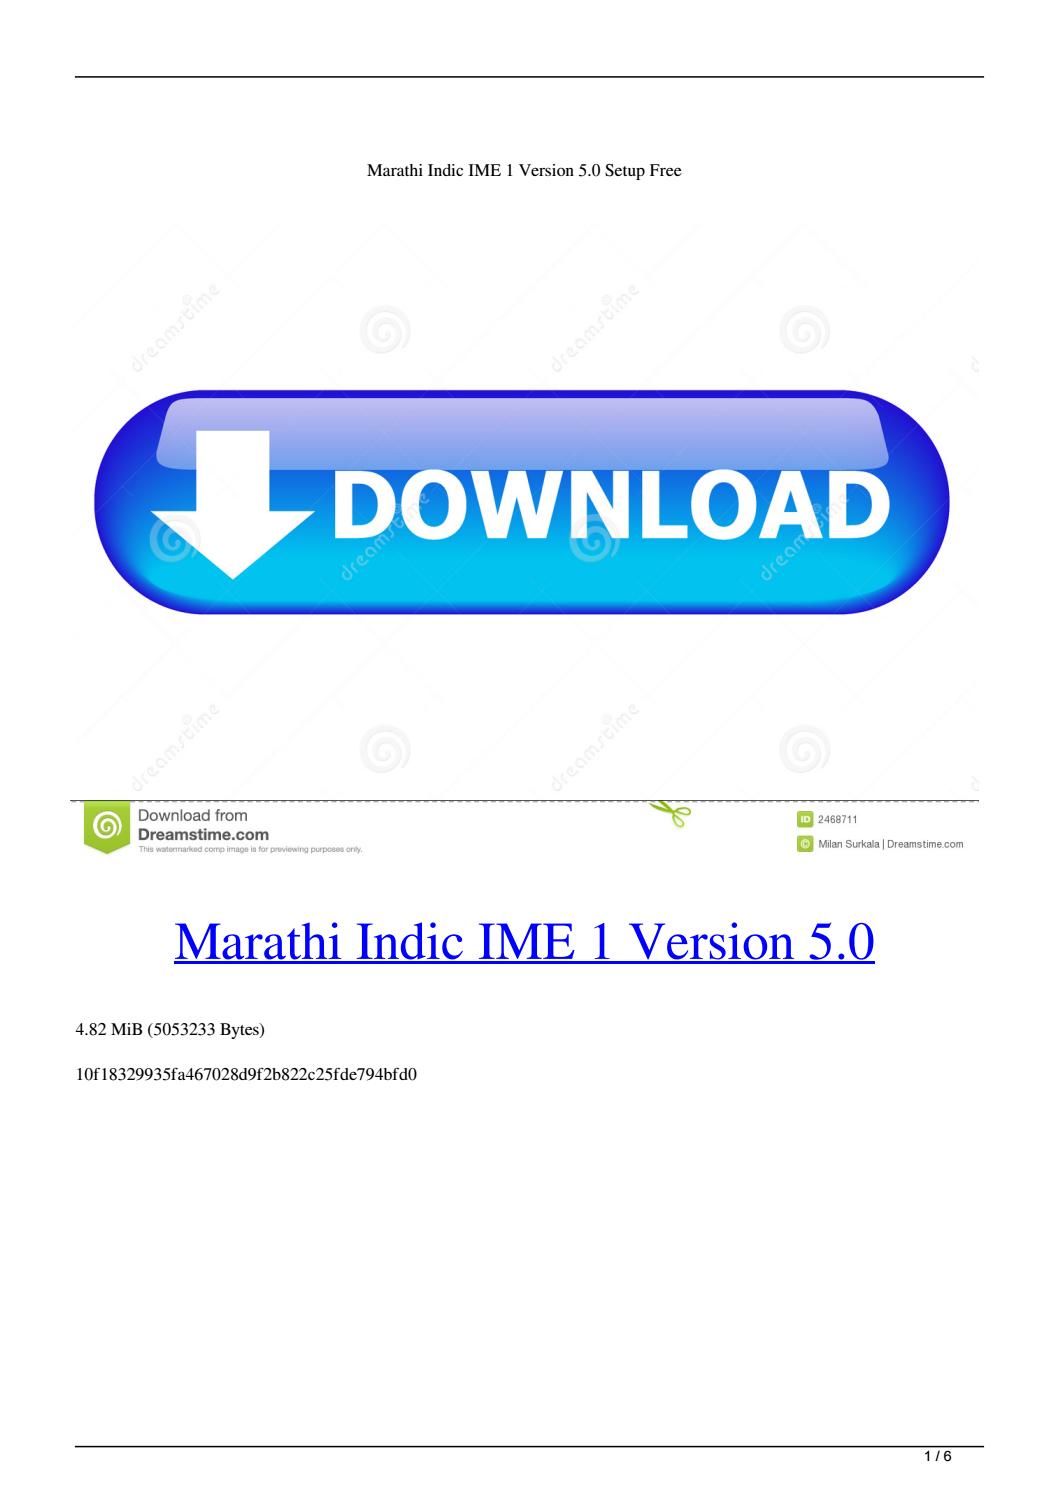 Hindi Indic Ime 1 V 5 1 Free Download Fastpowermates